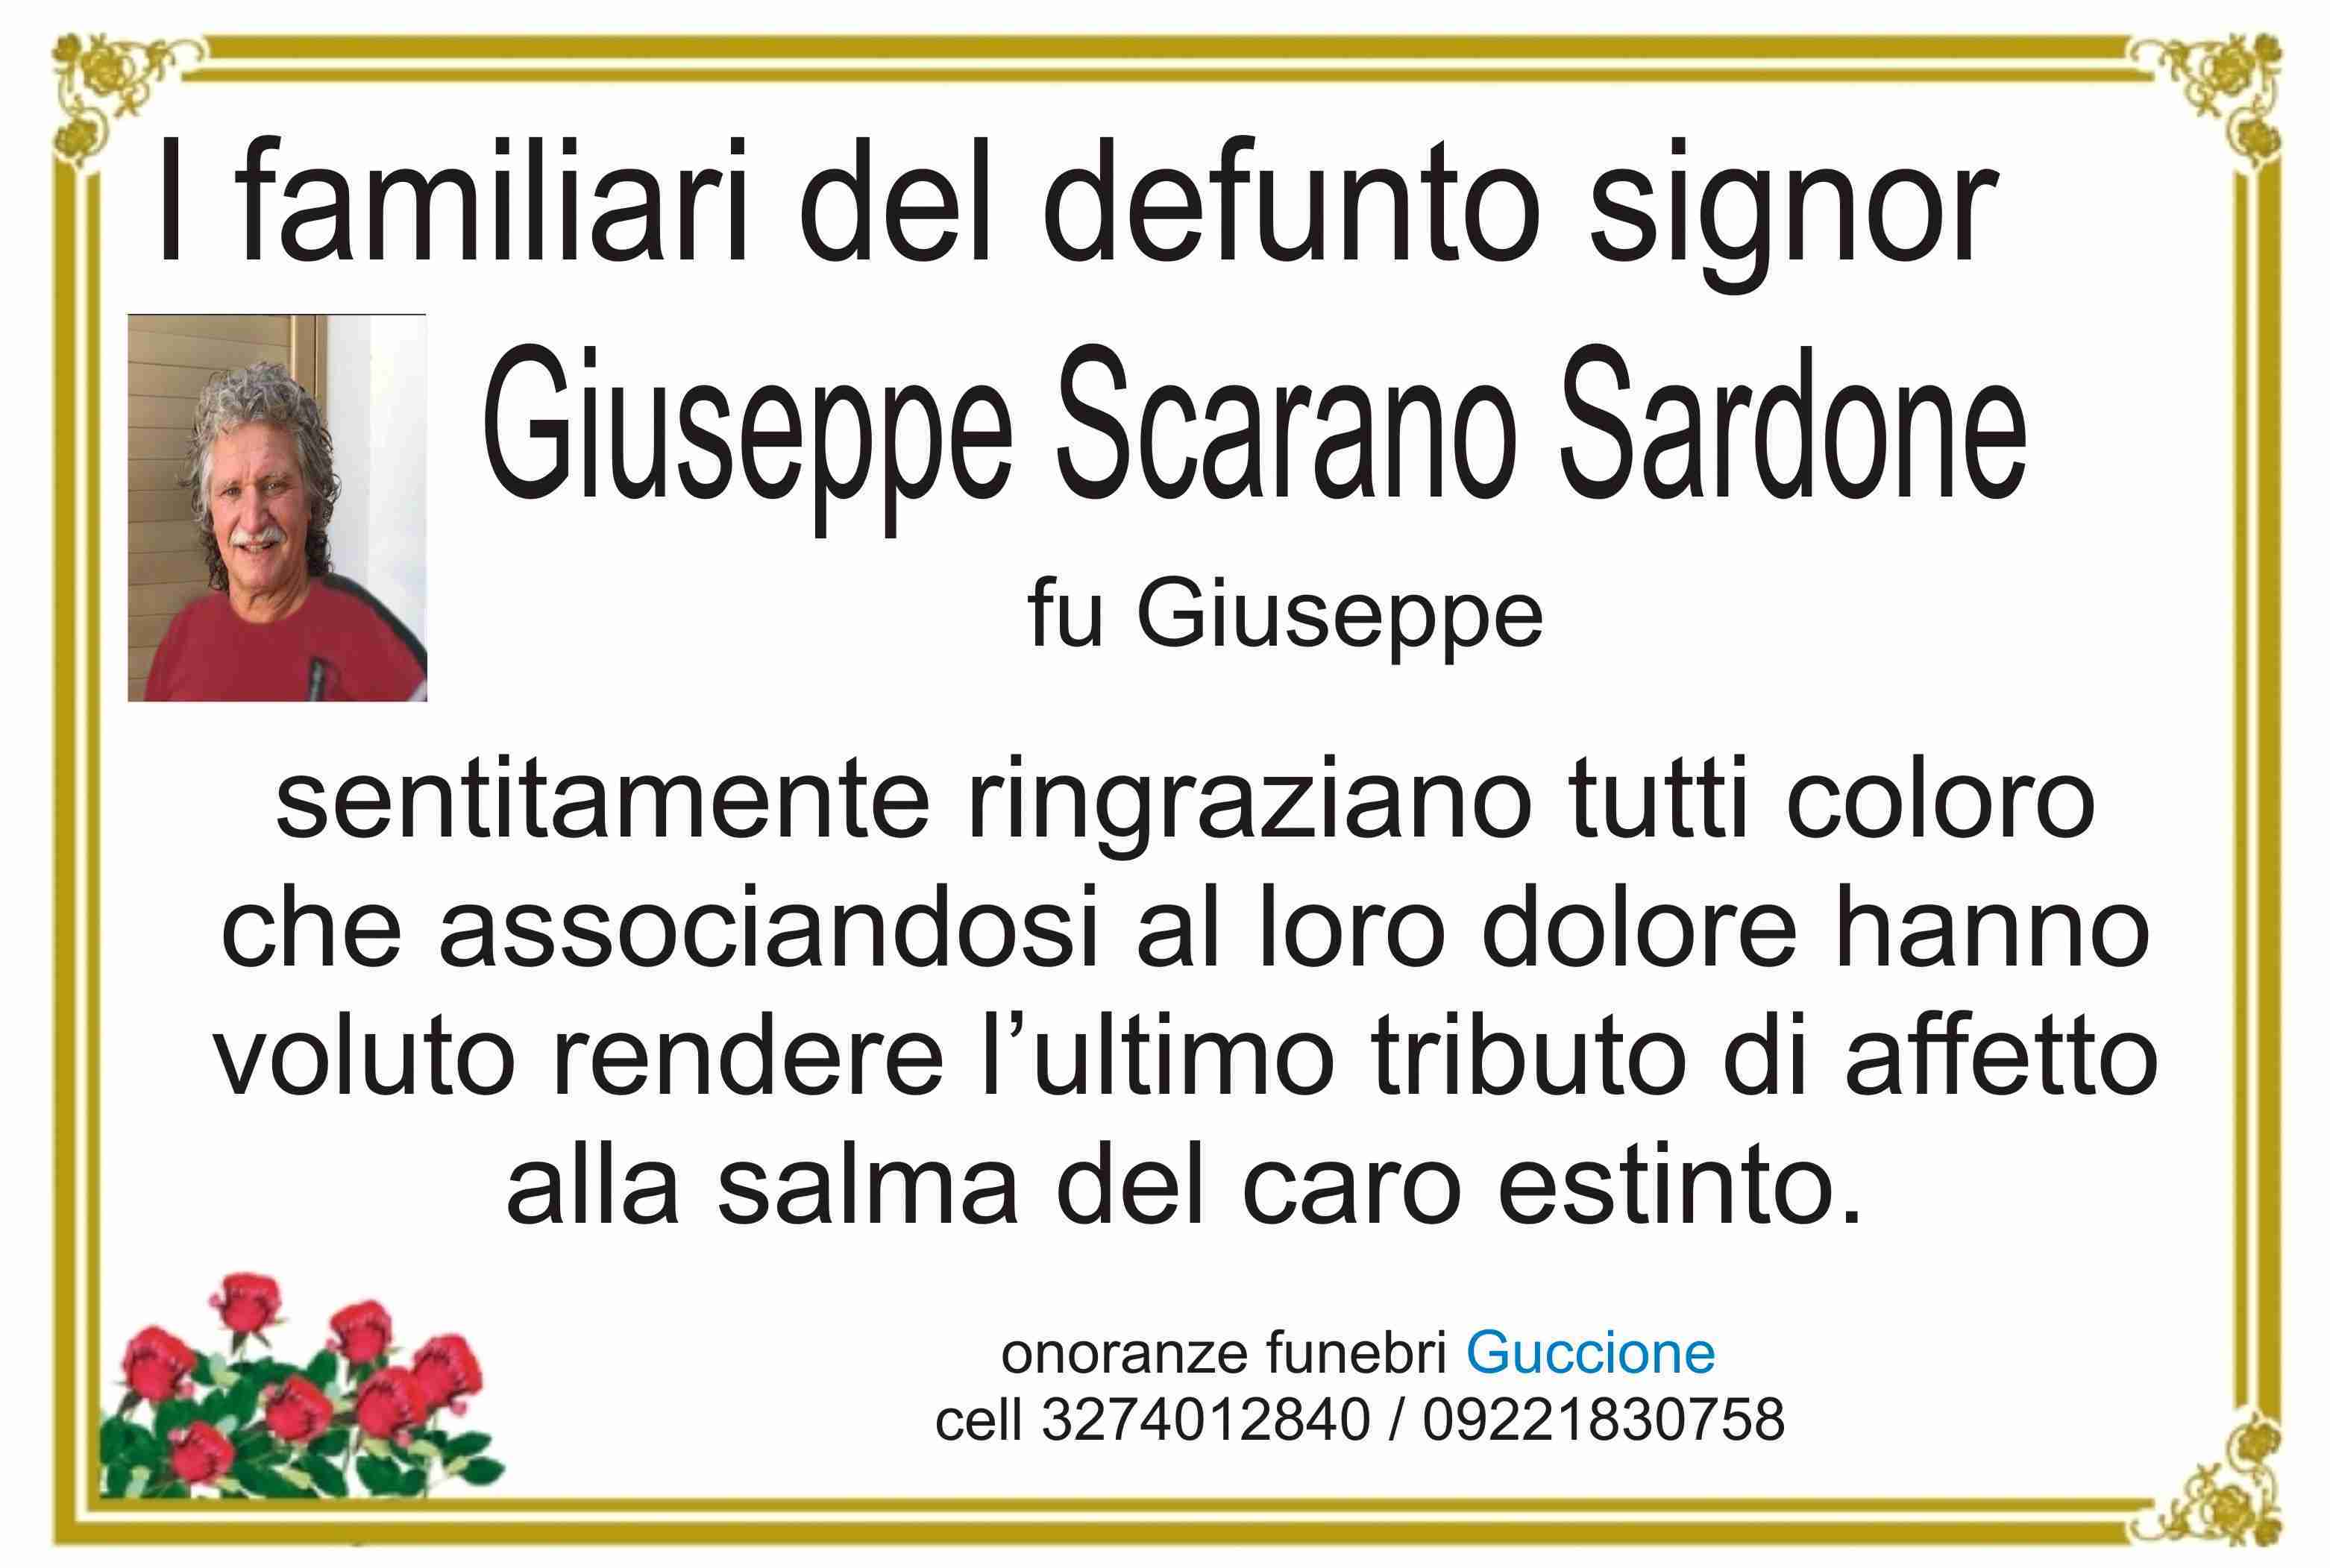 Giuseppe Scarano Sardone